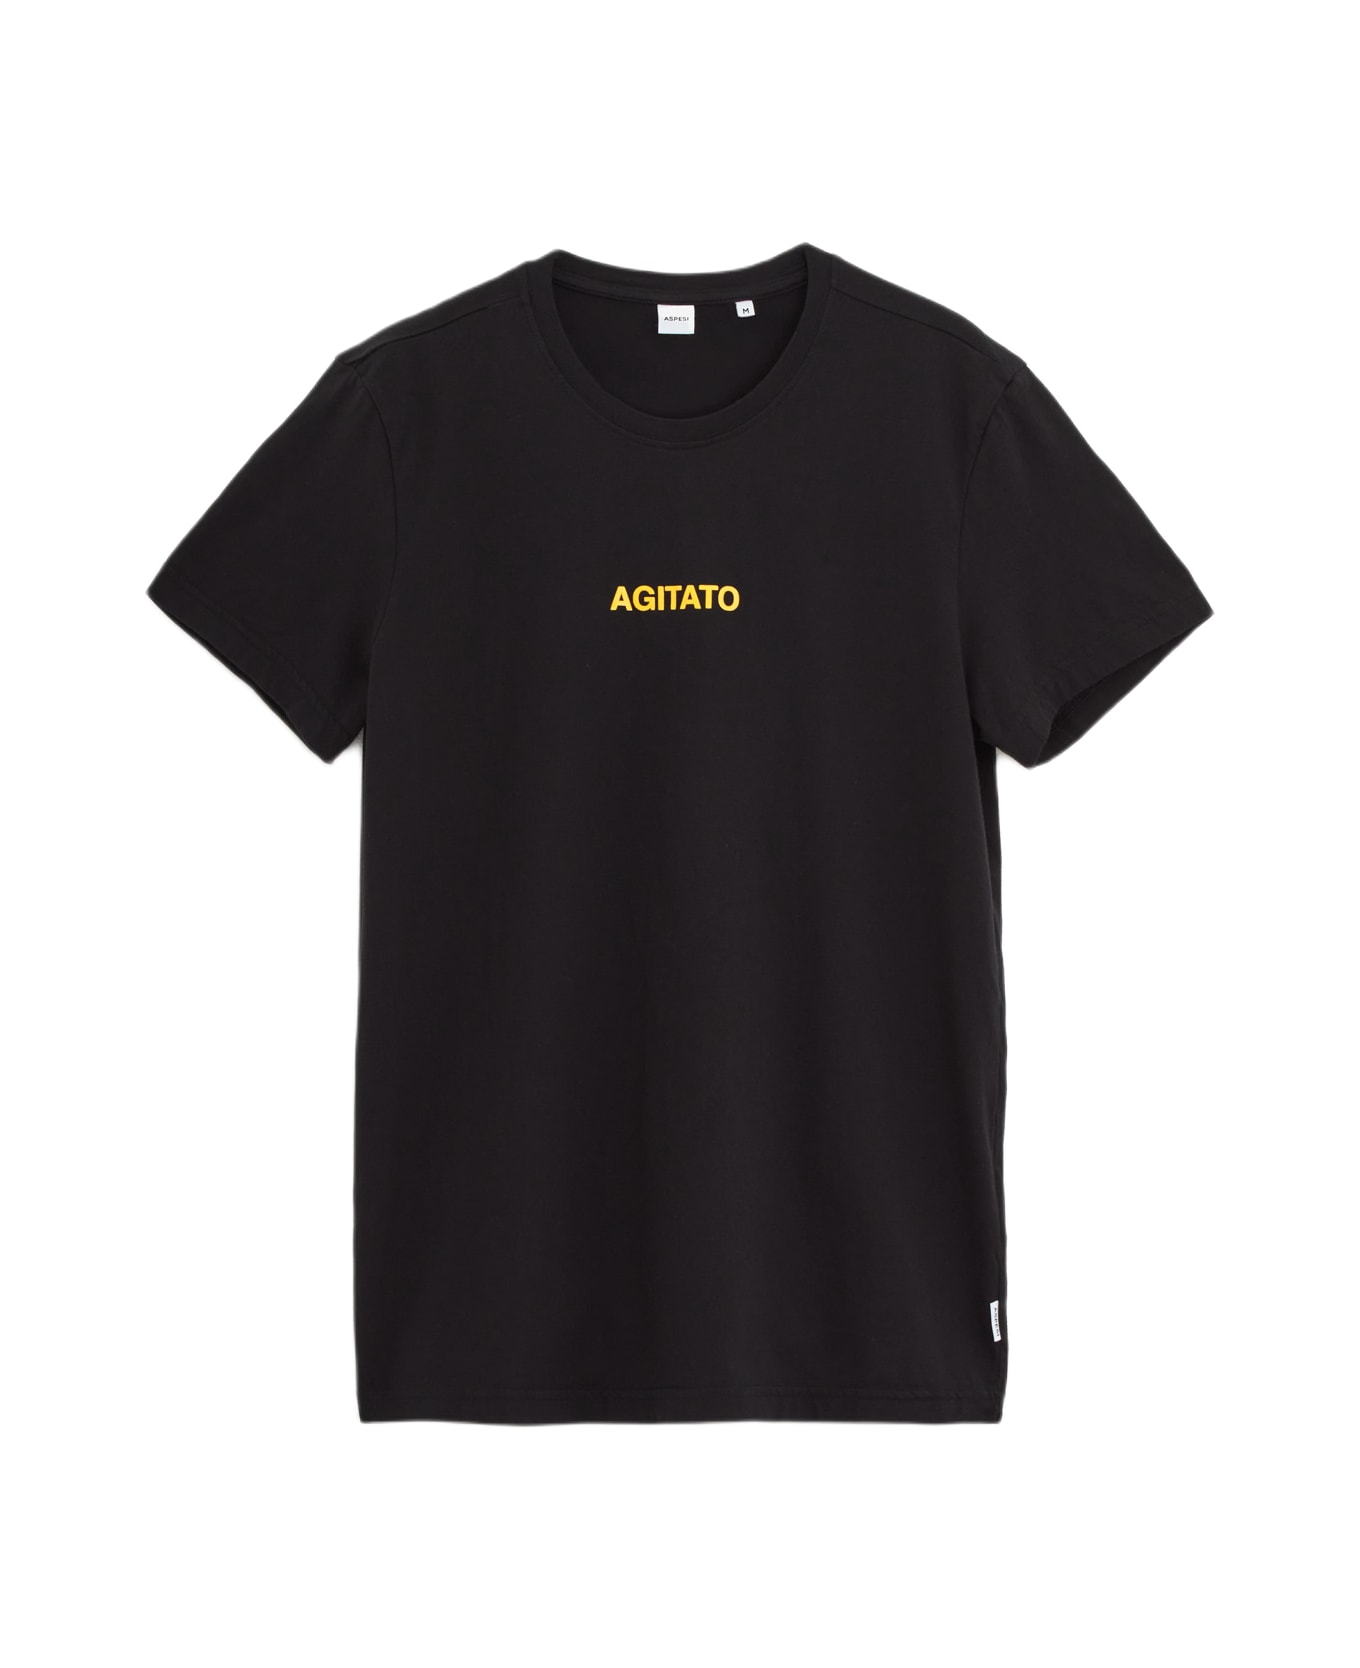 Aspesi Agitato T-shirt - black